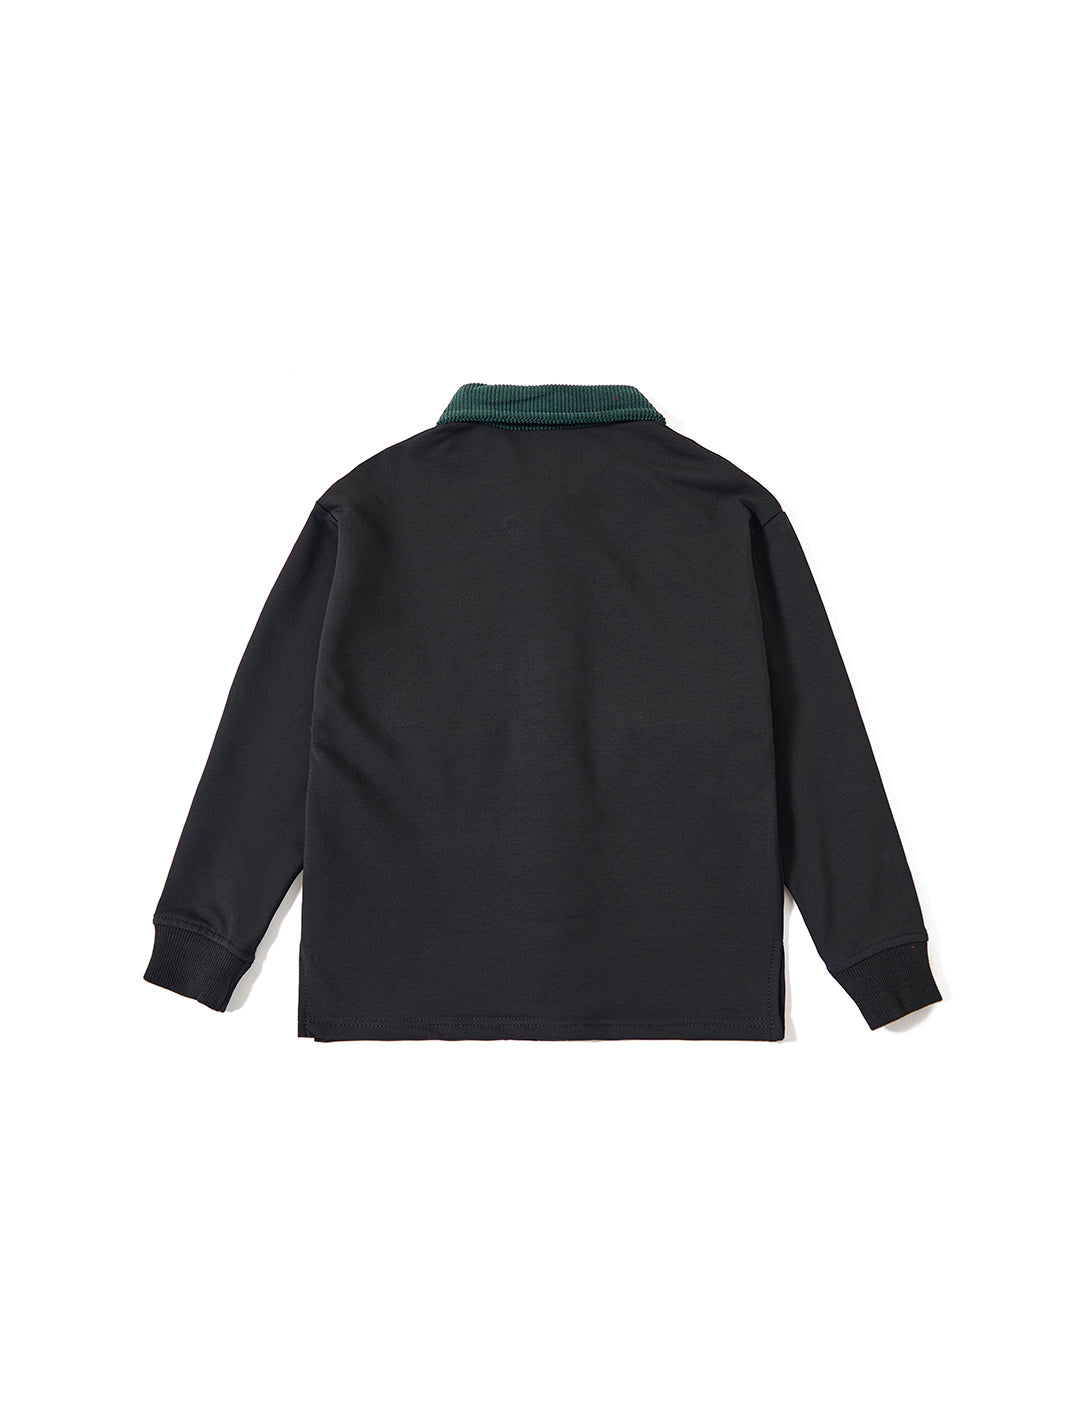 Corduroy Collar Shirt - Black/Green